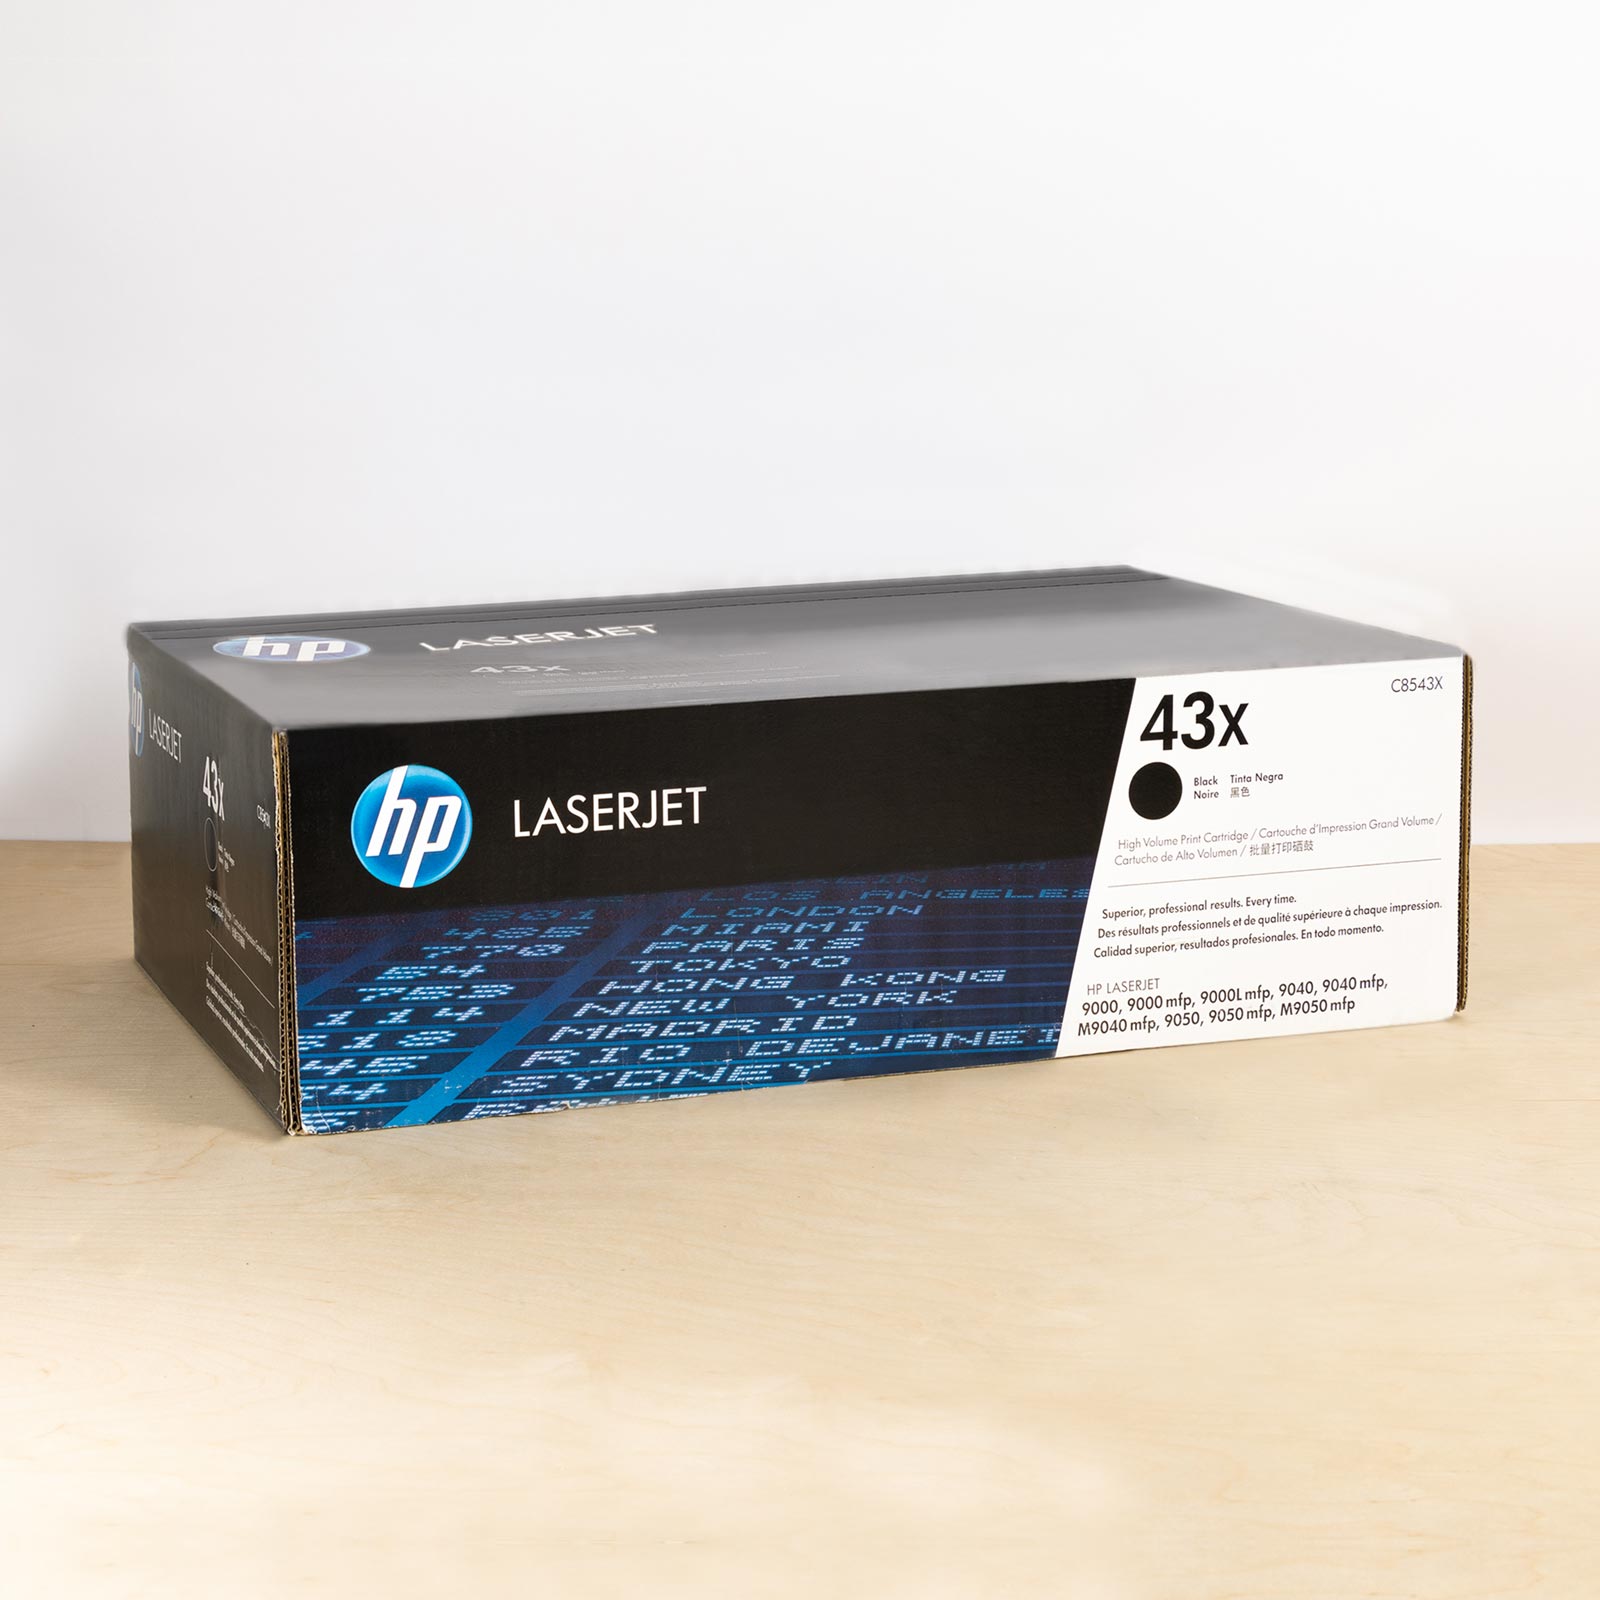 HP C8543X/HP 43X Toner Cartridge - 30000 Pages (High Yield Prints 